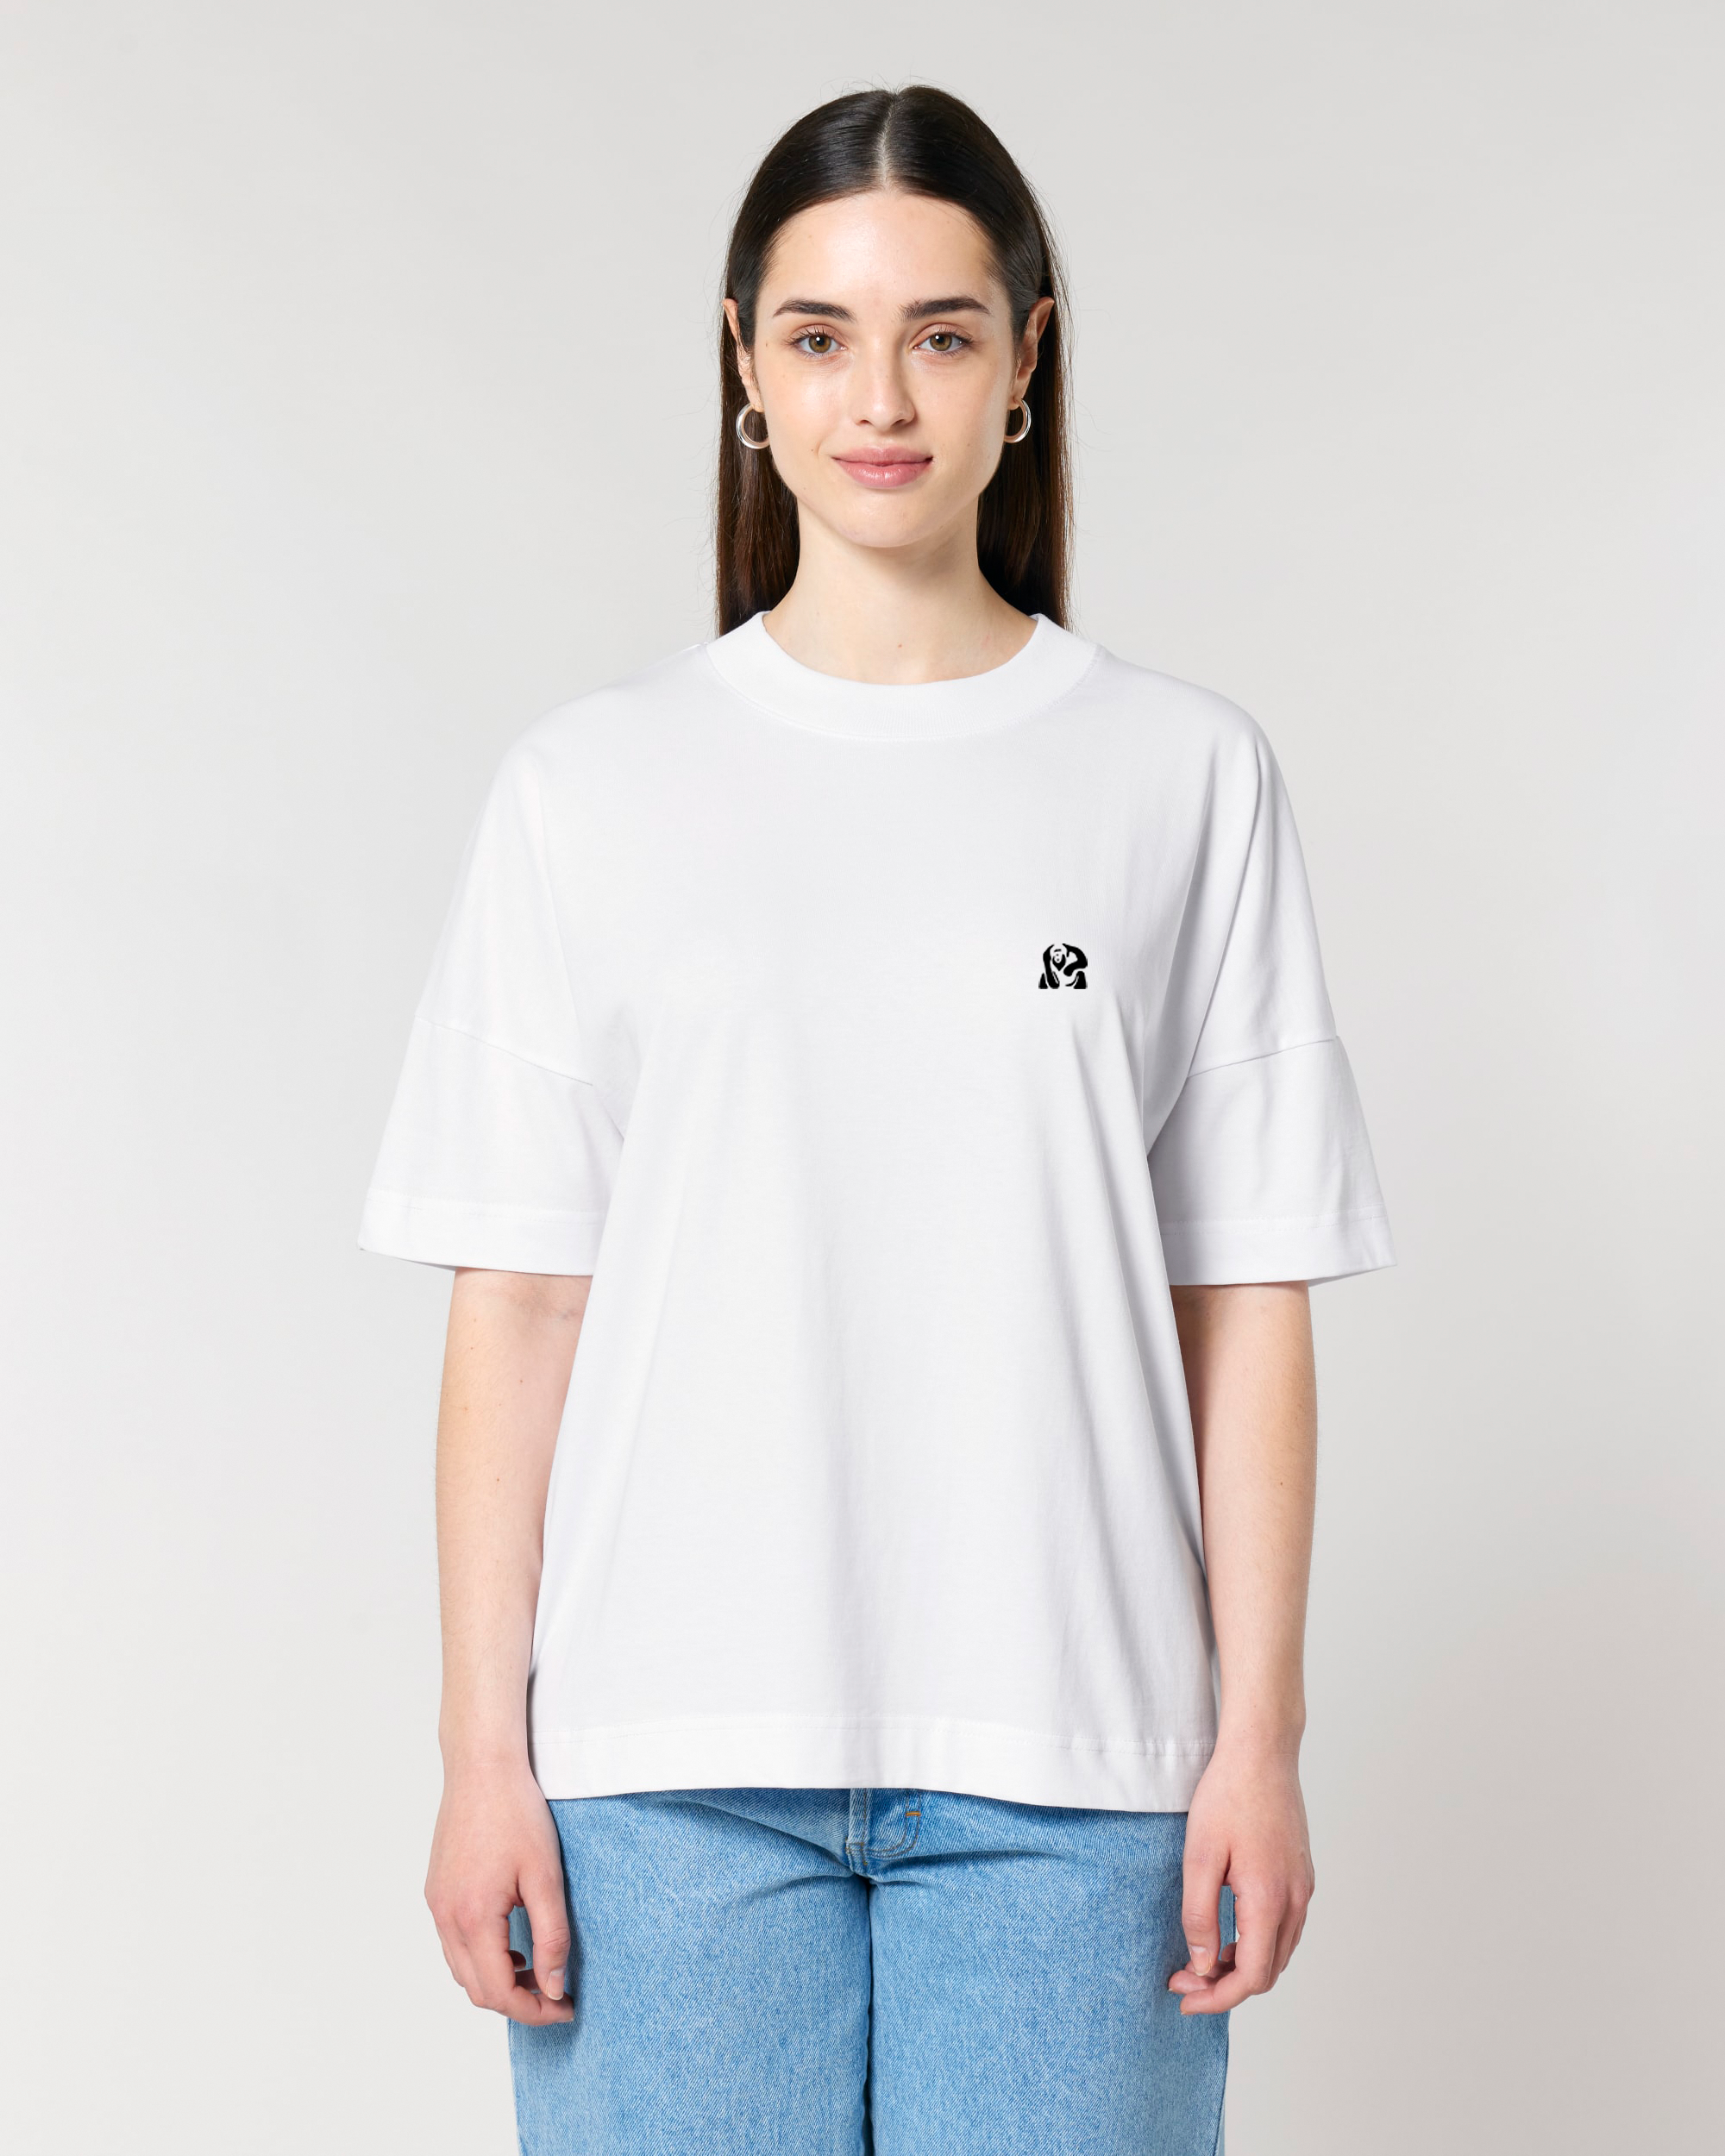 Dickes, übergroßes Unisex-T-Shirt aus Bio-Baumwolle – Kilimanjaro